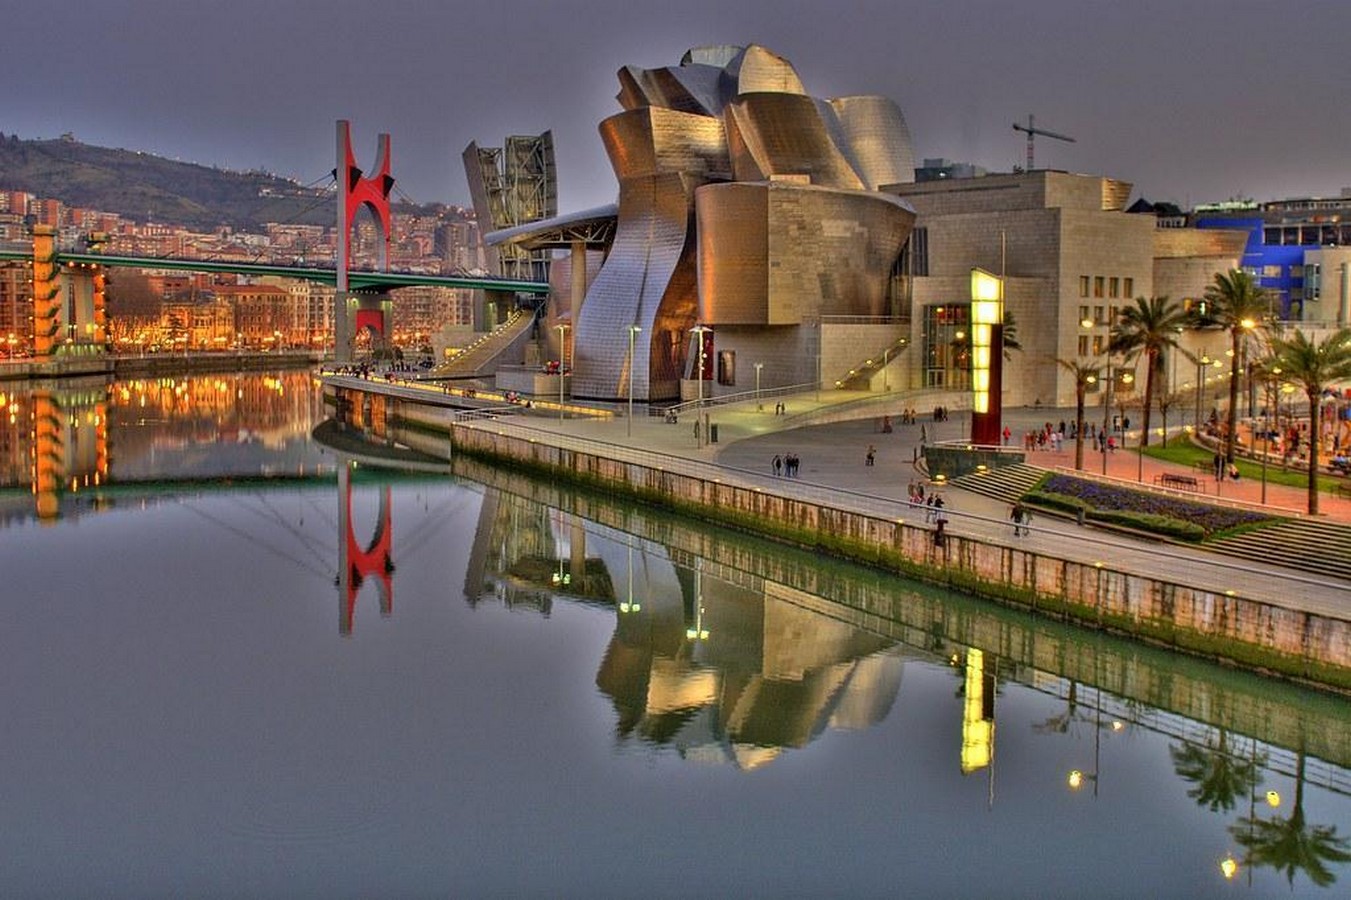 Frank Gehry: The Deconstructivist Architect Who Creates Sculptural Buildings - Sheet5